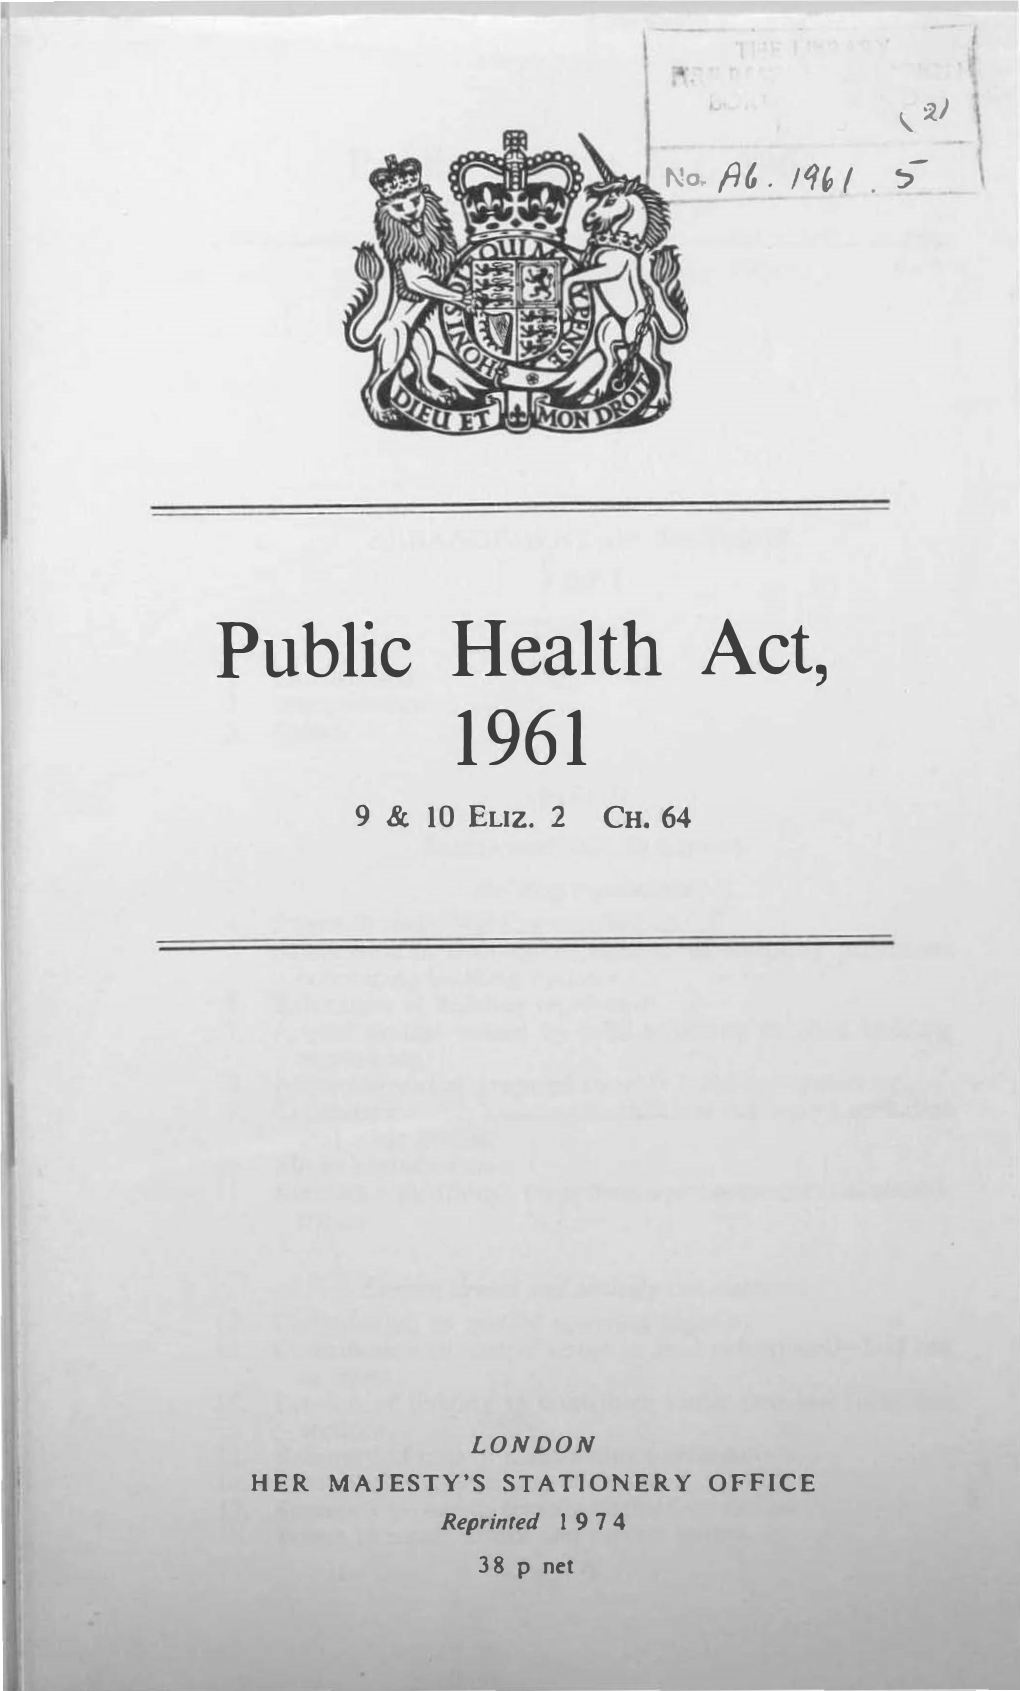 Public Health Act, 1961